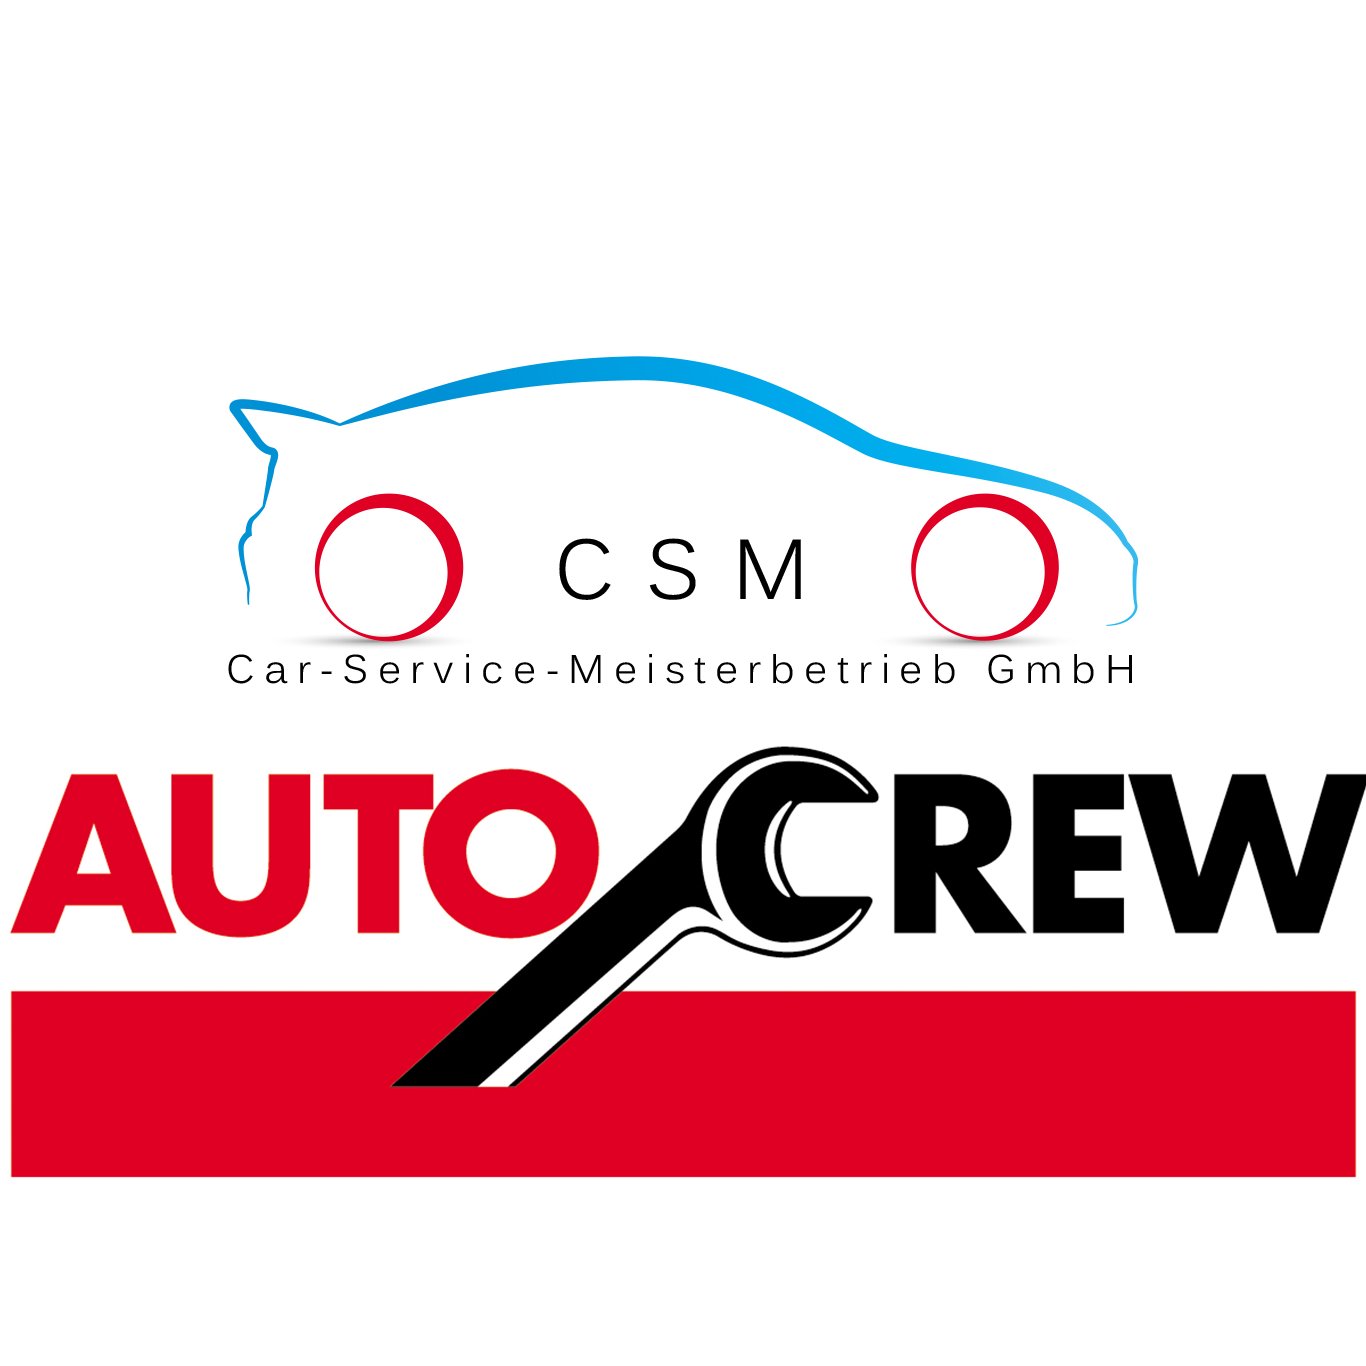 AutoCrew - CSM Car-Service-Meisterbetrieb GmbH in Nürnberg - Logo